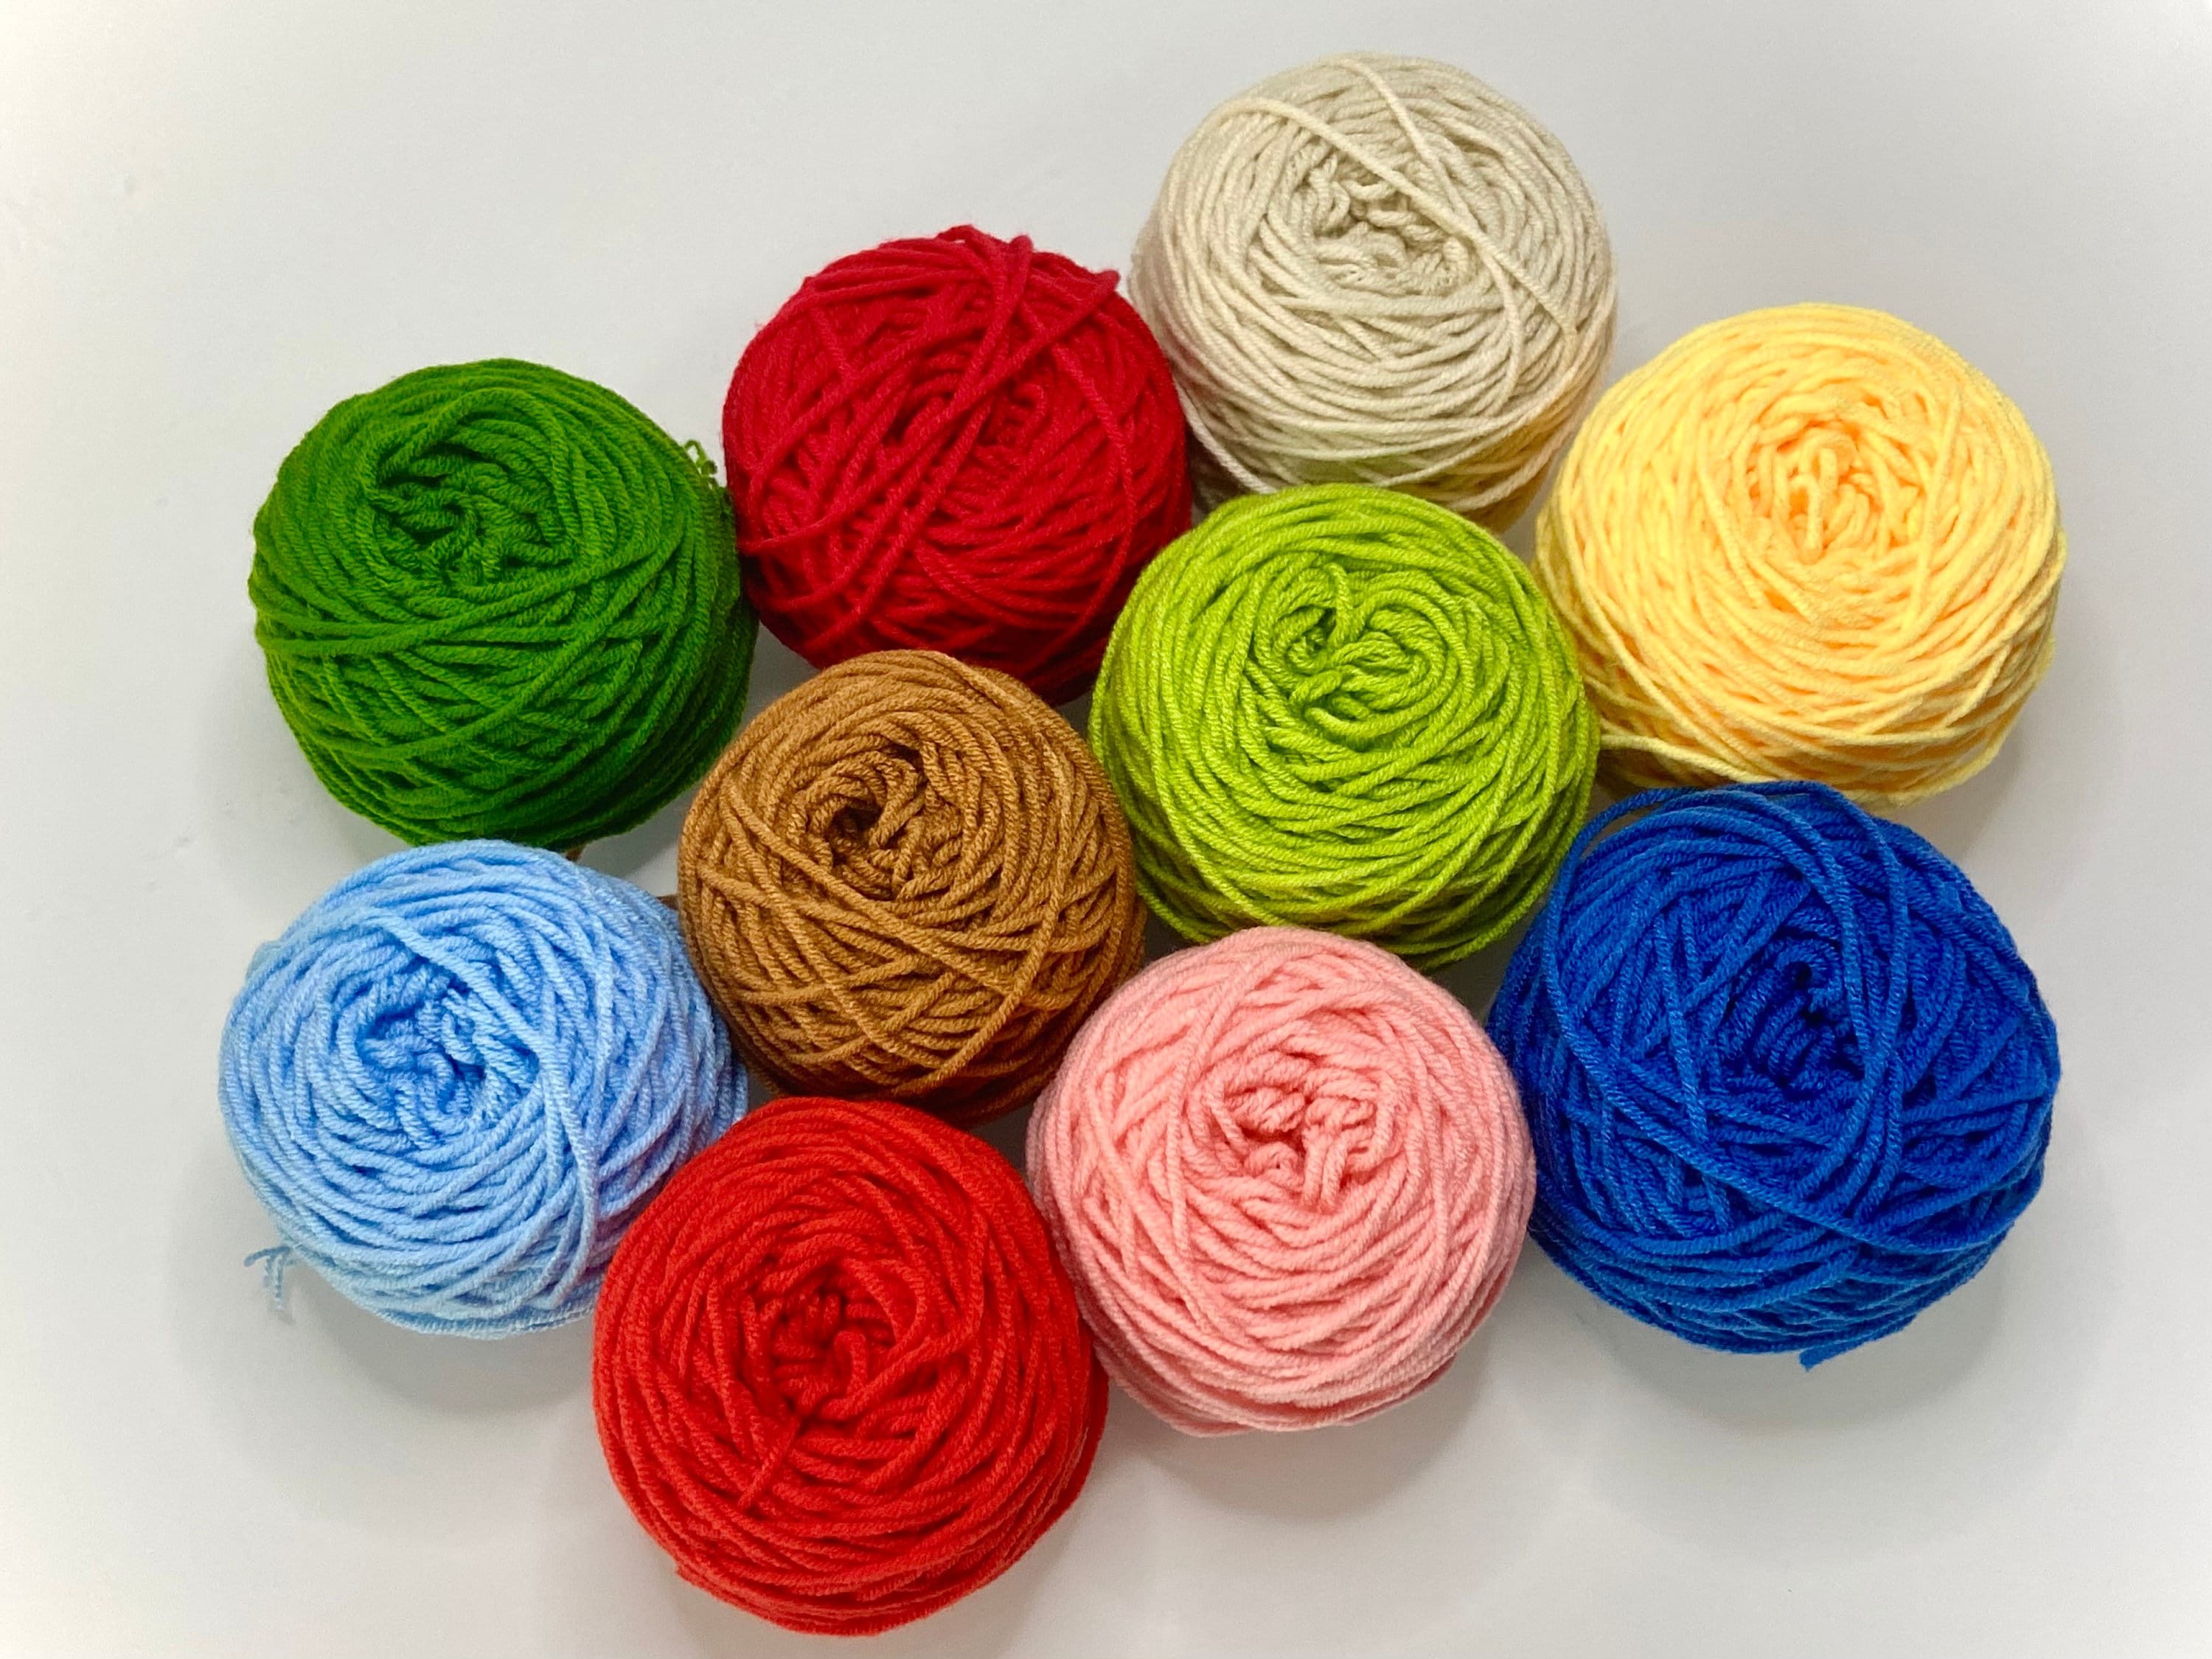 5 Ply Milk Cotton Yarn for Amigurumi, Crochet, Knitting, Punch Needling,  and Crafting 41-93